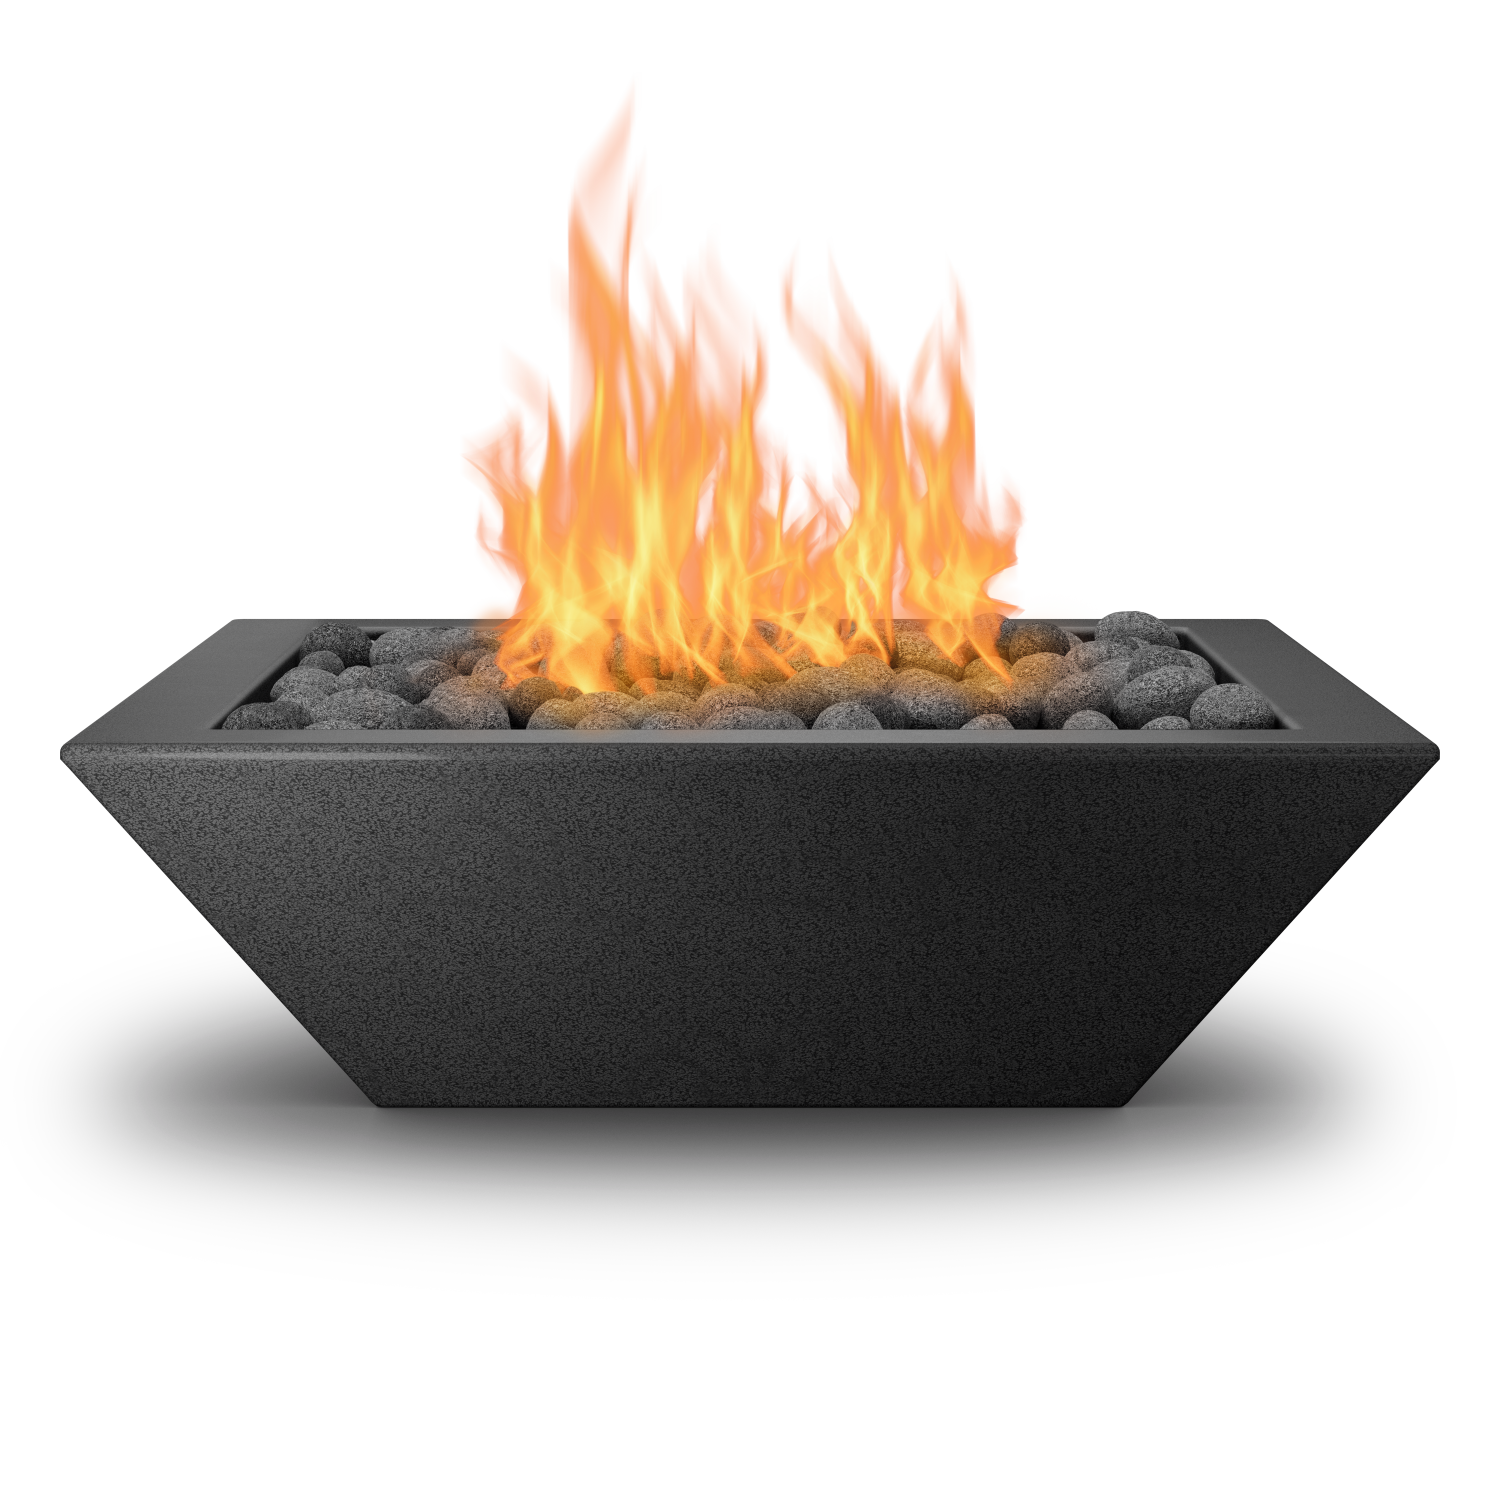 Corinthian Fire Bowl Product Image